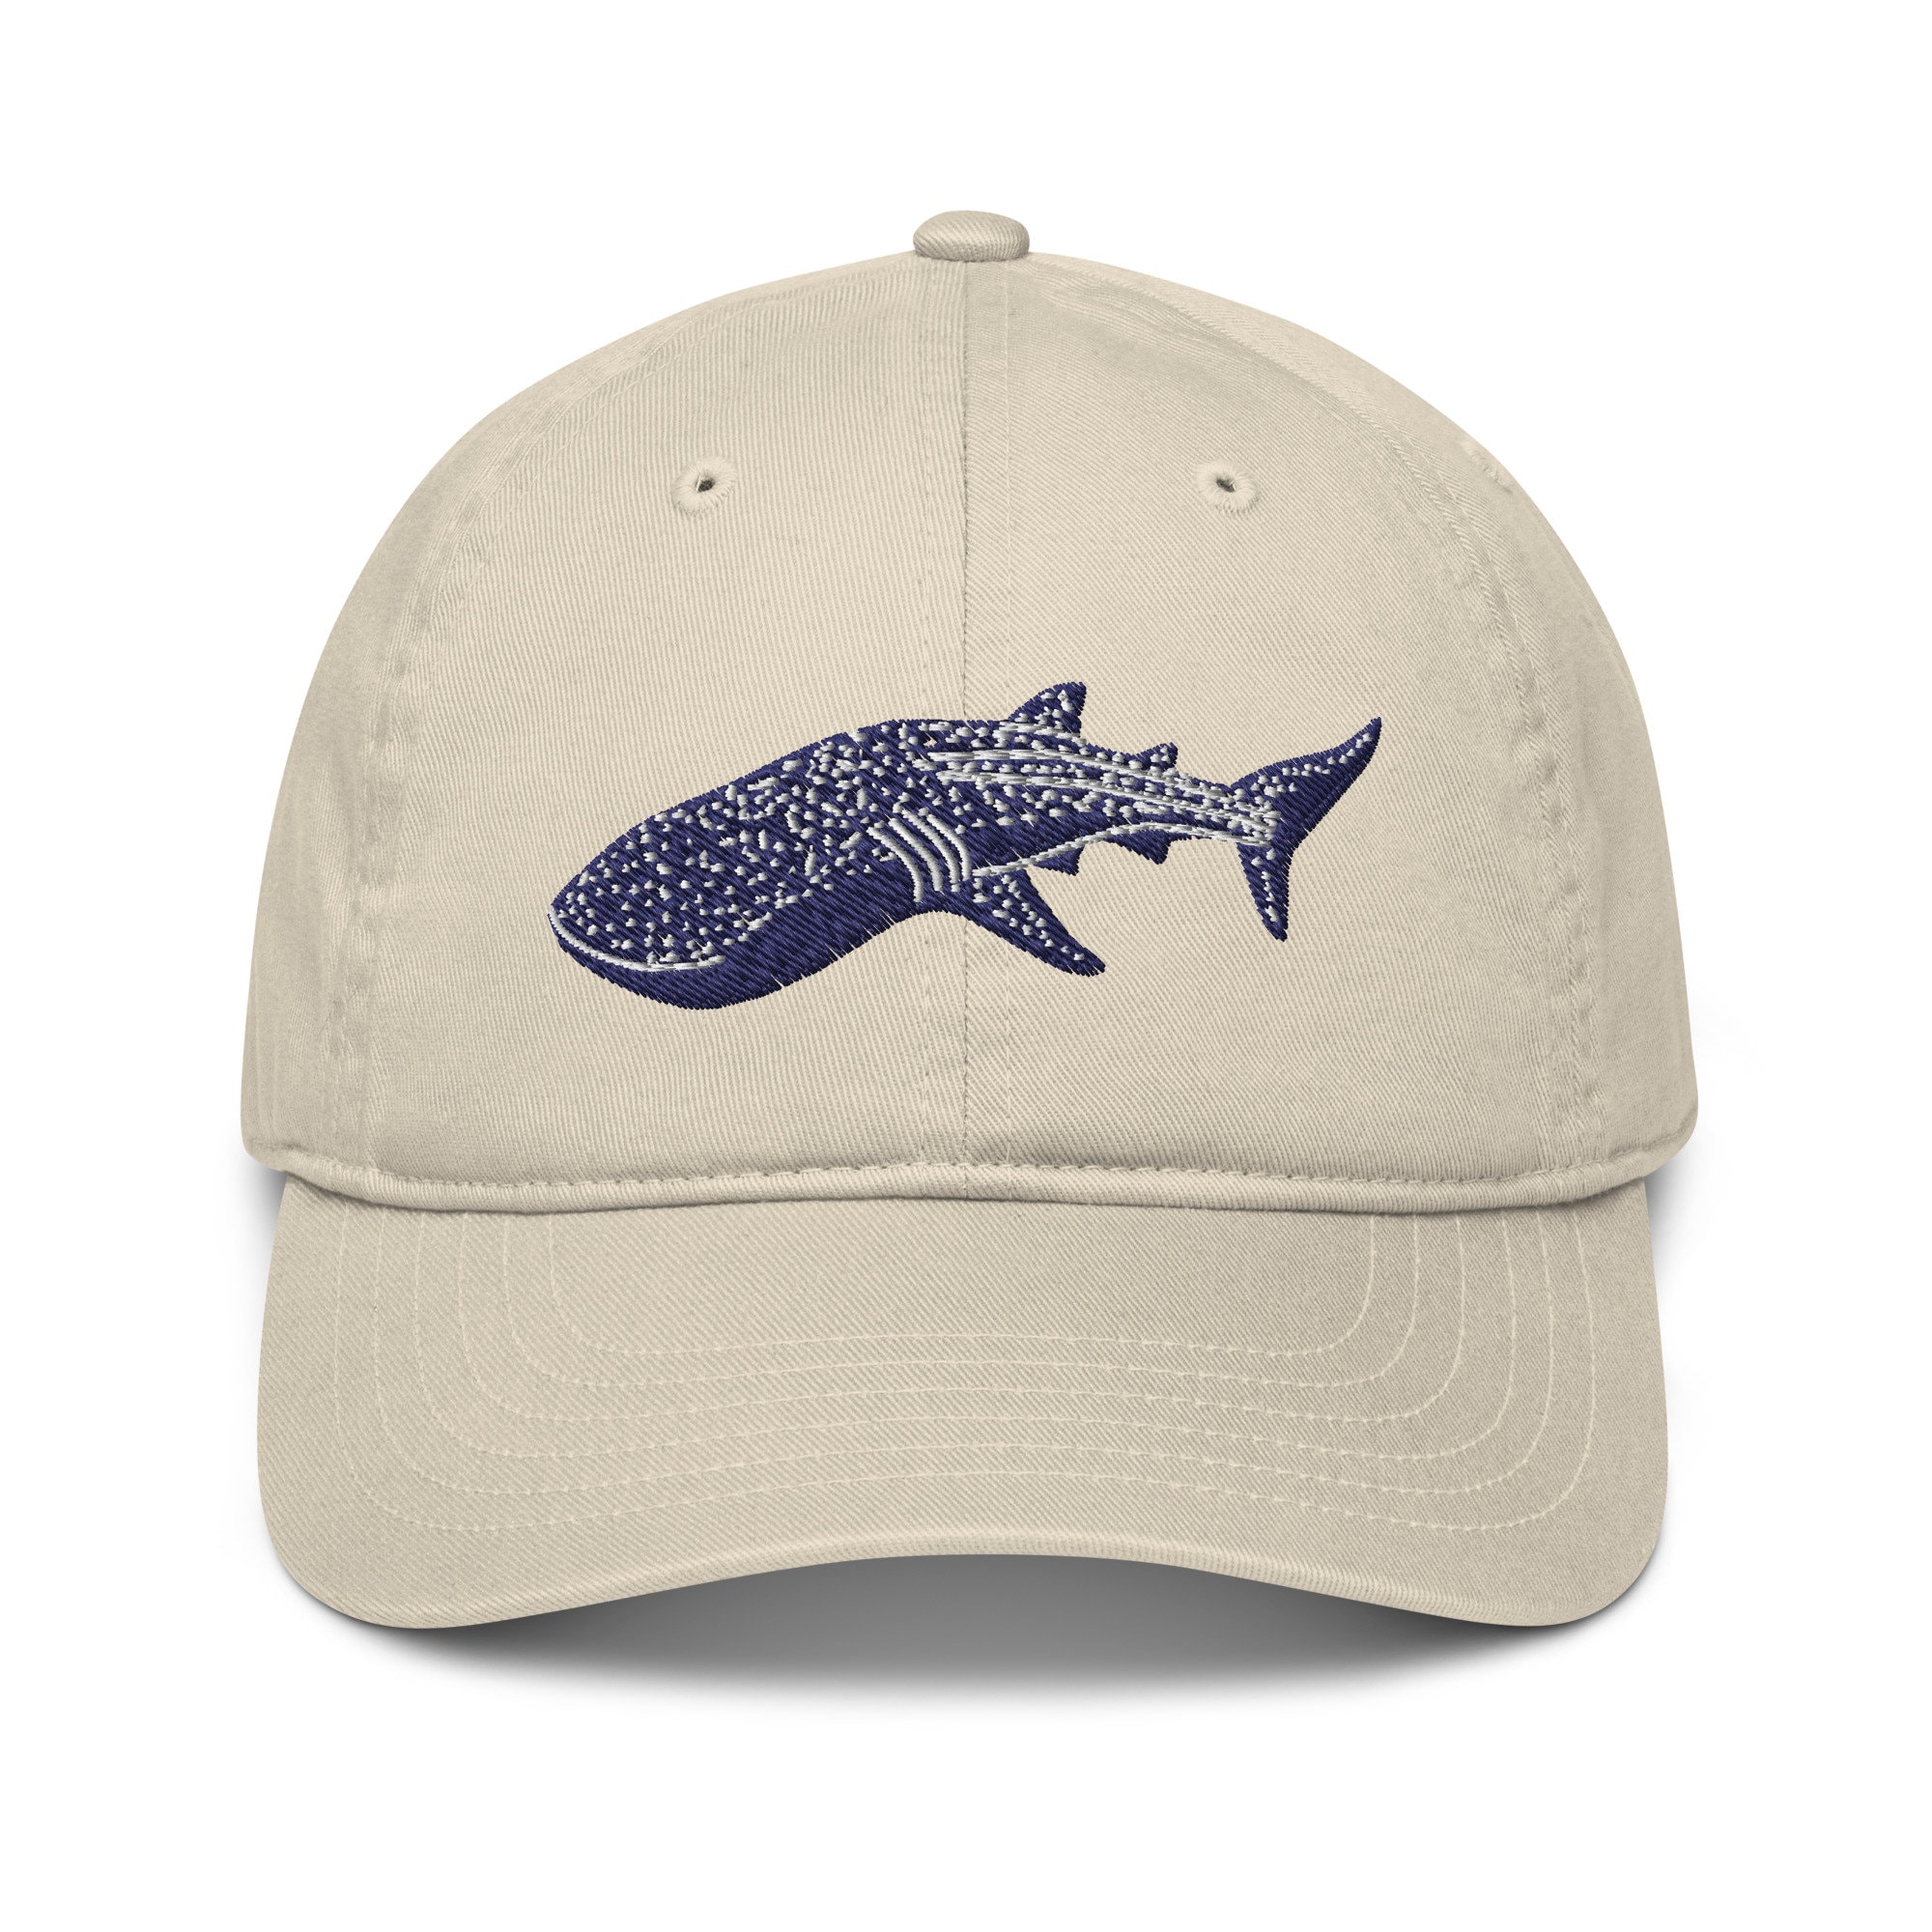 Trendy Hats Hats Shark Hats Vintage Baseball Cap Gifts for Dad